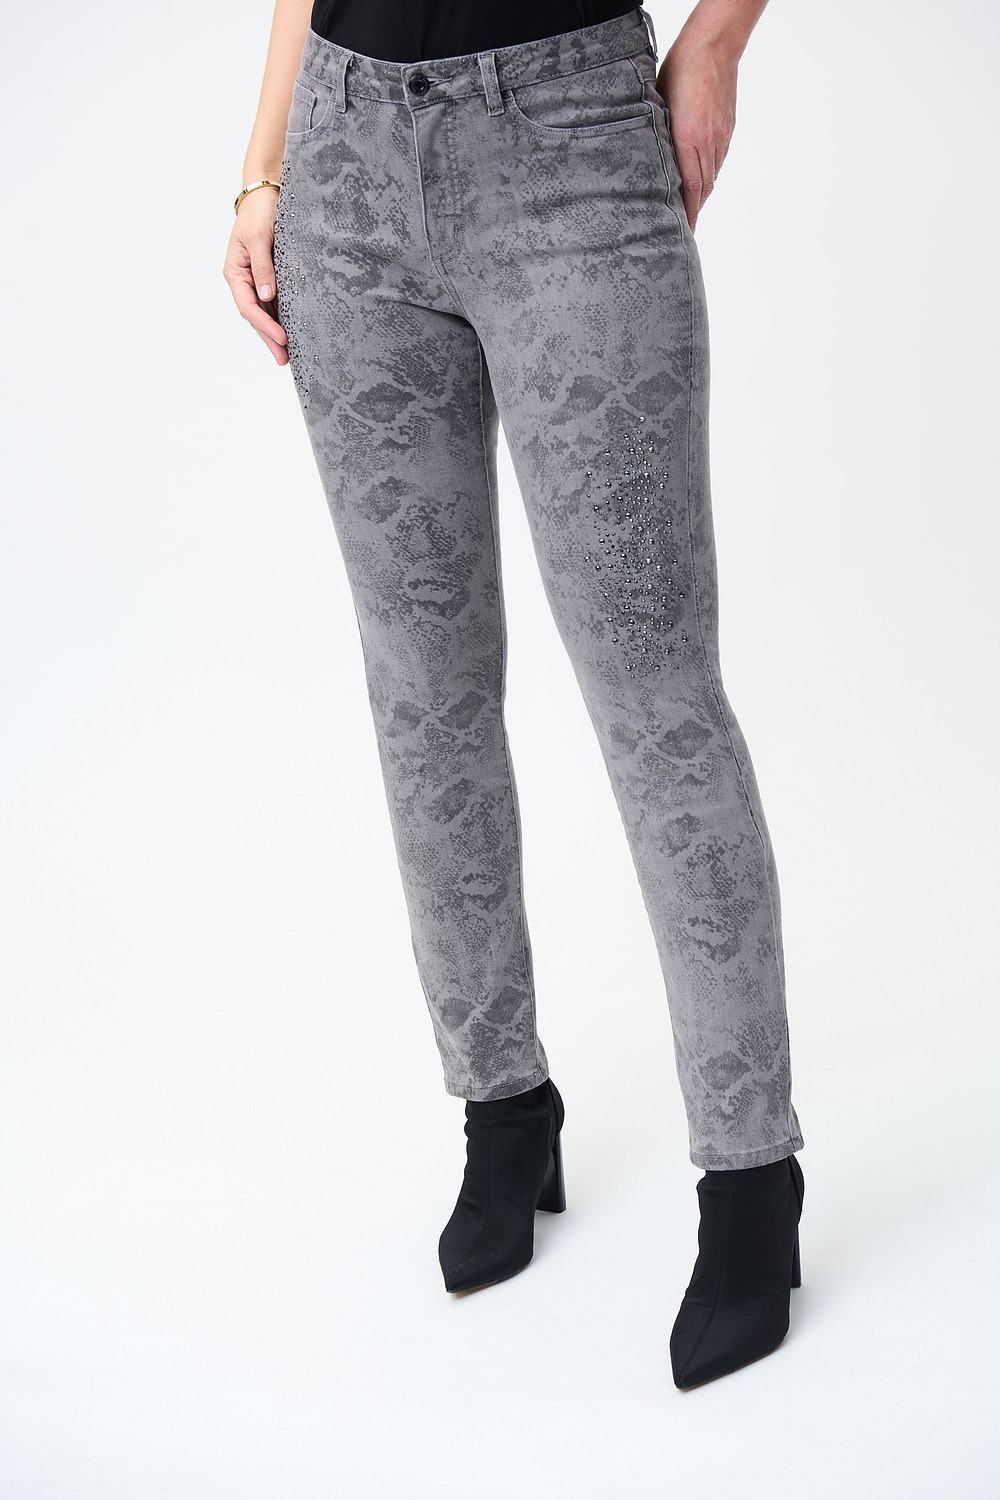 Joseph Ribkoff Printed Jeans Style 224925. Grey 163